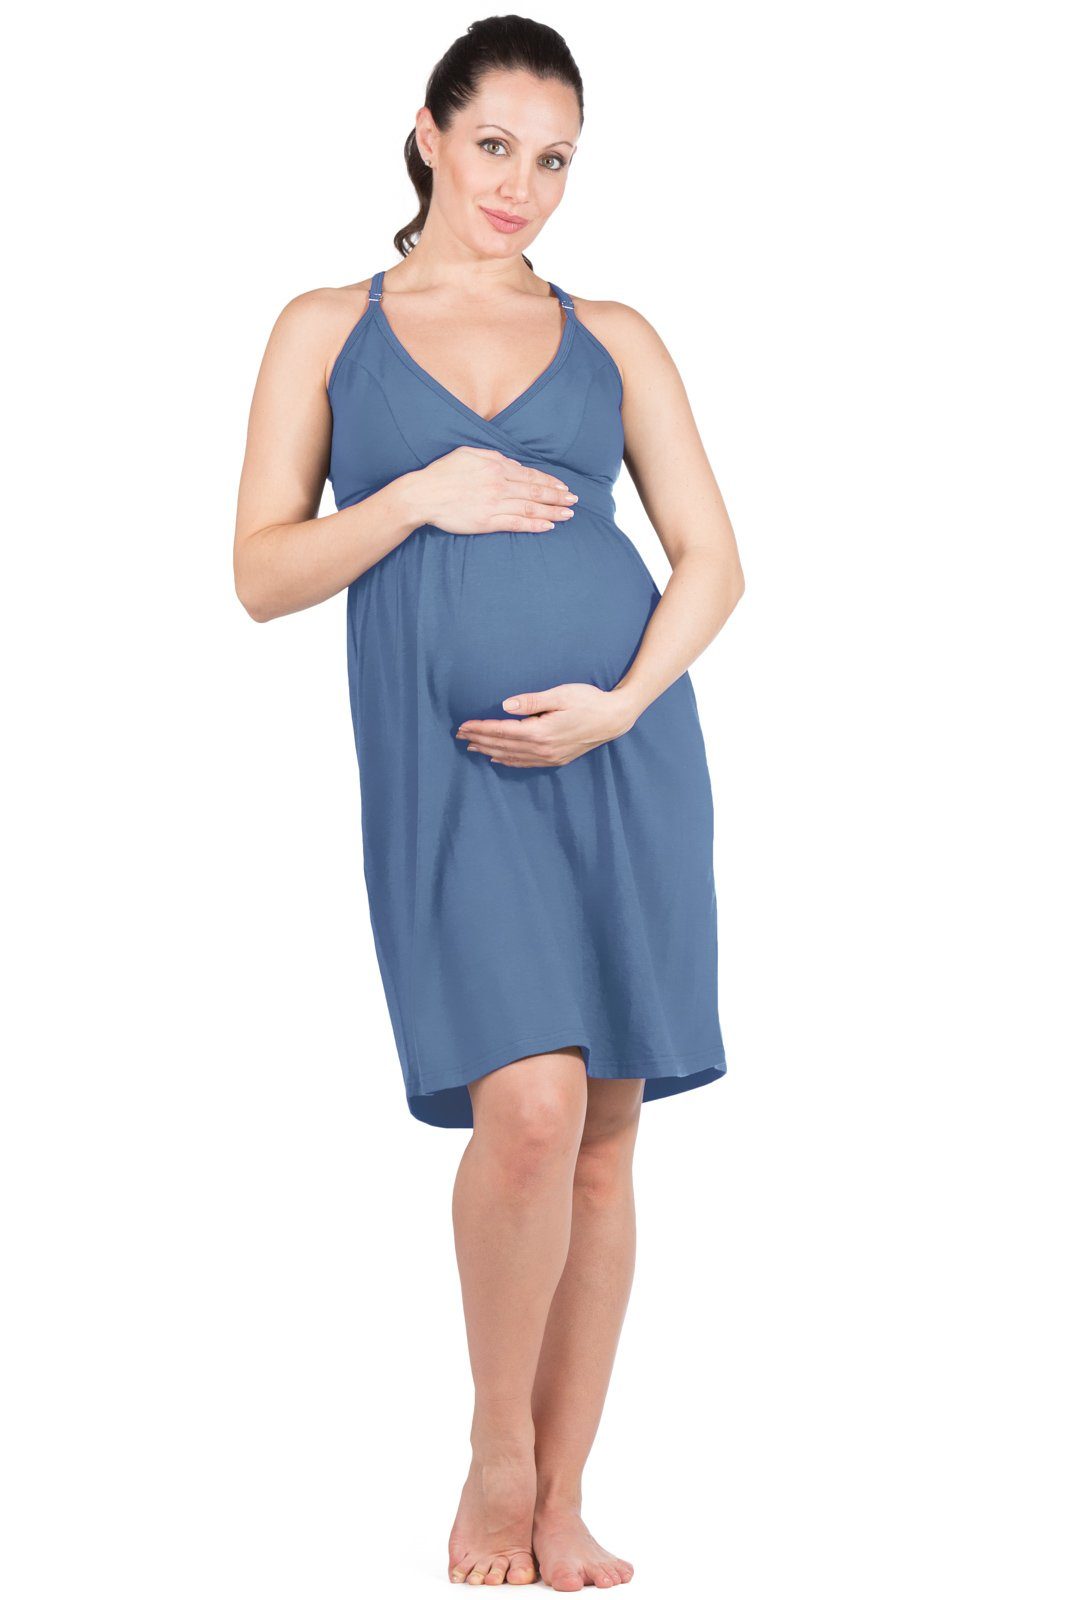 Women's Maternity Dress Nursing Nightgown Breastfeeding Full Slips  Sleepwear With Pad